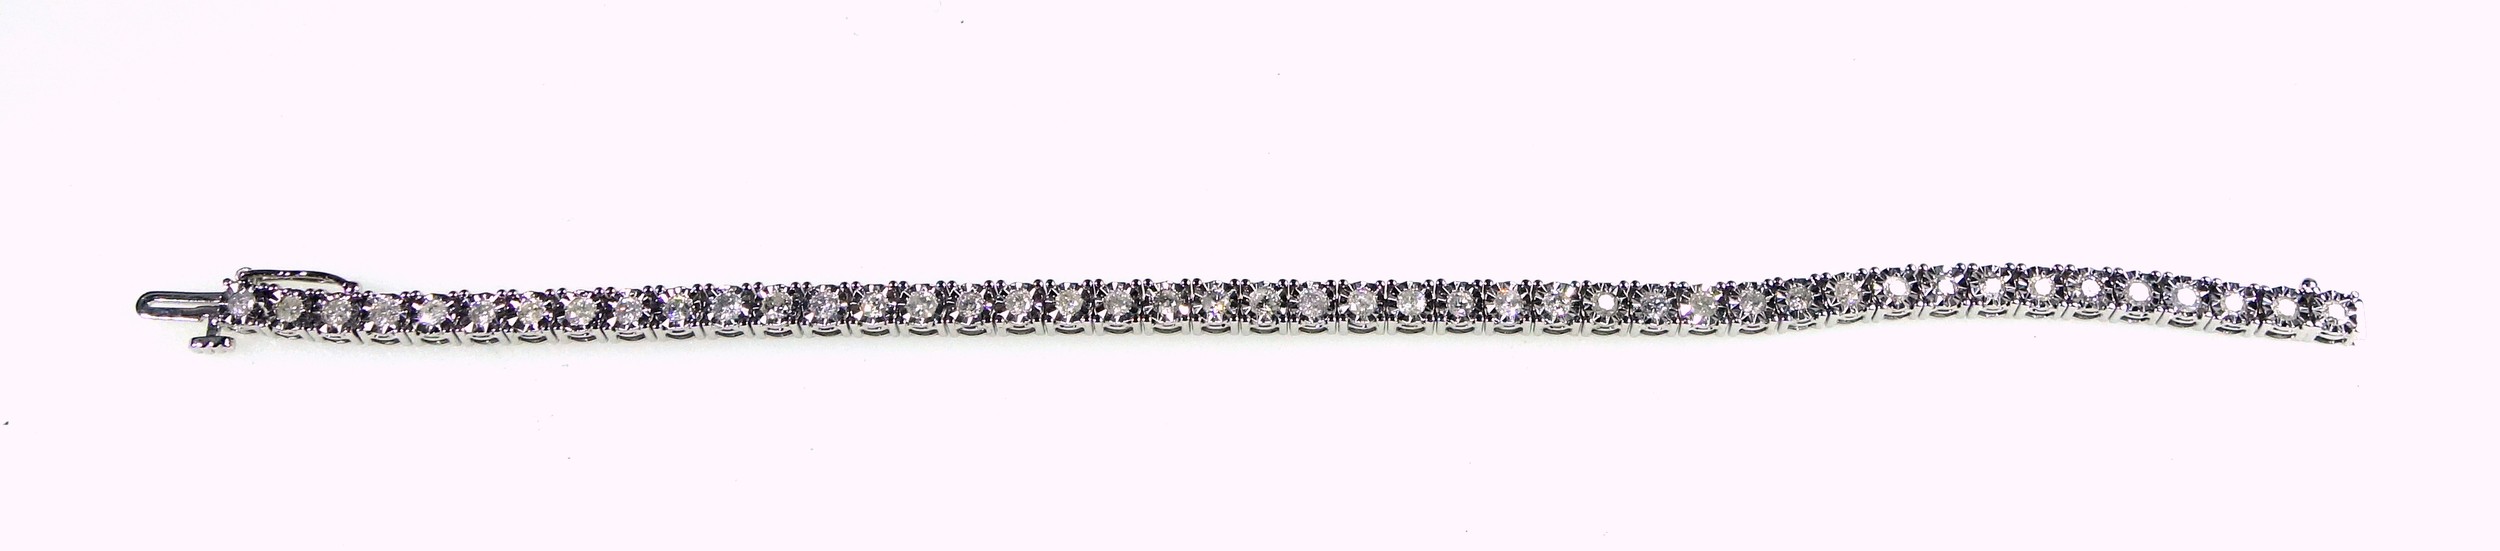 9ct white gold tennis bracelet with 44 illusion set diamonds, L.18.3cm, gross 11.9grs, cased. (2) - Image 2 of 4